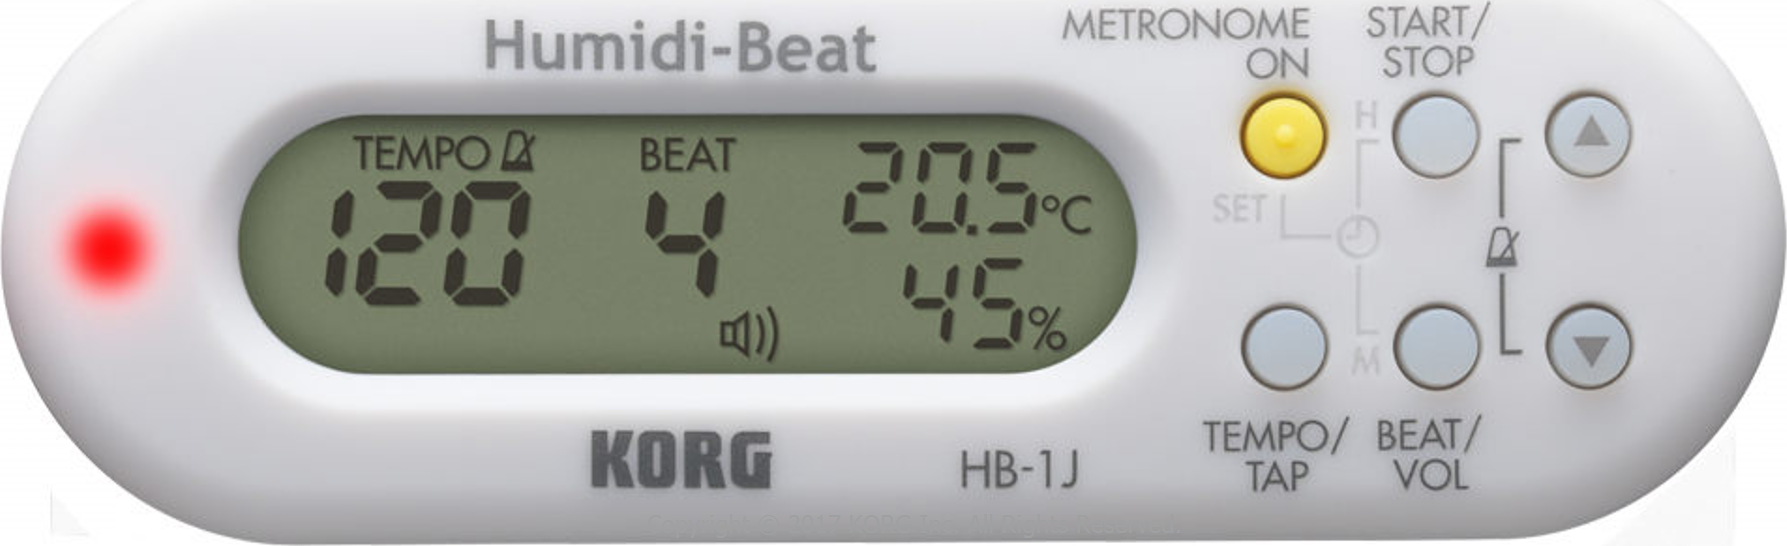 Korg Humidi-beat Metronome With Humidity Temperature Detector White - Accordeur - Main picture